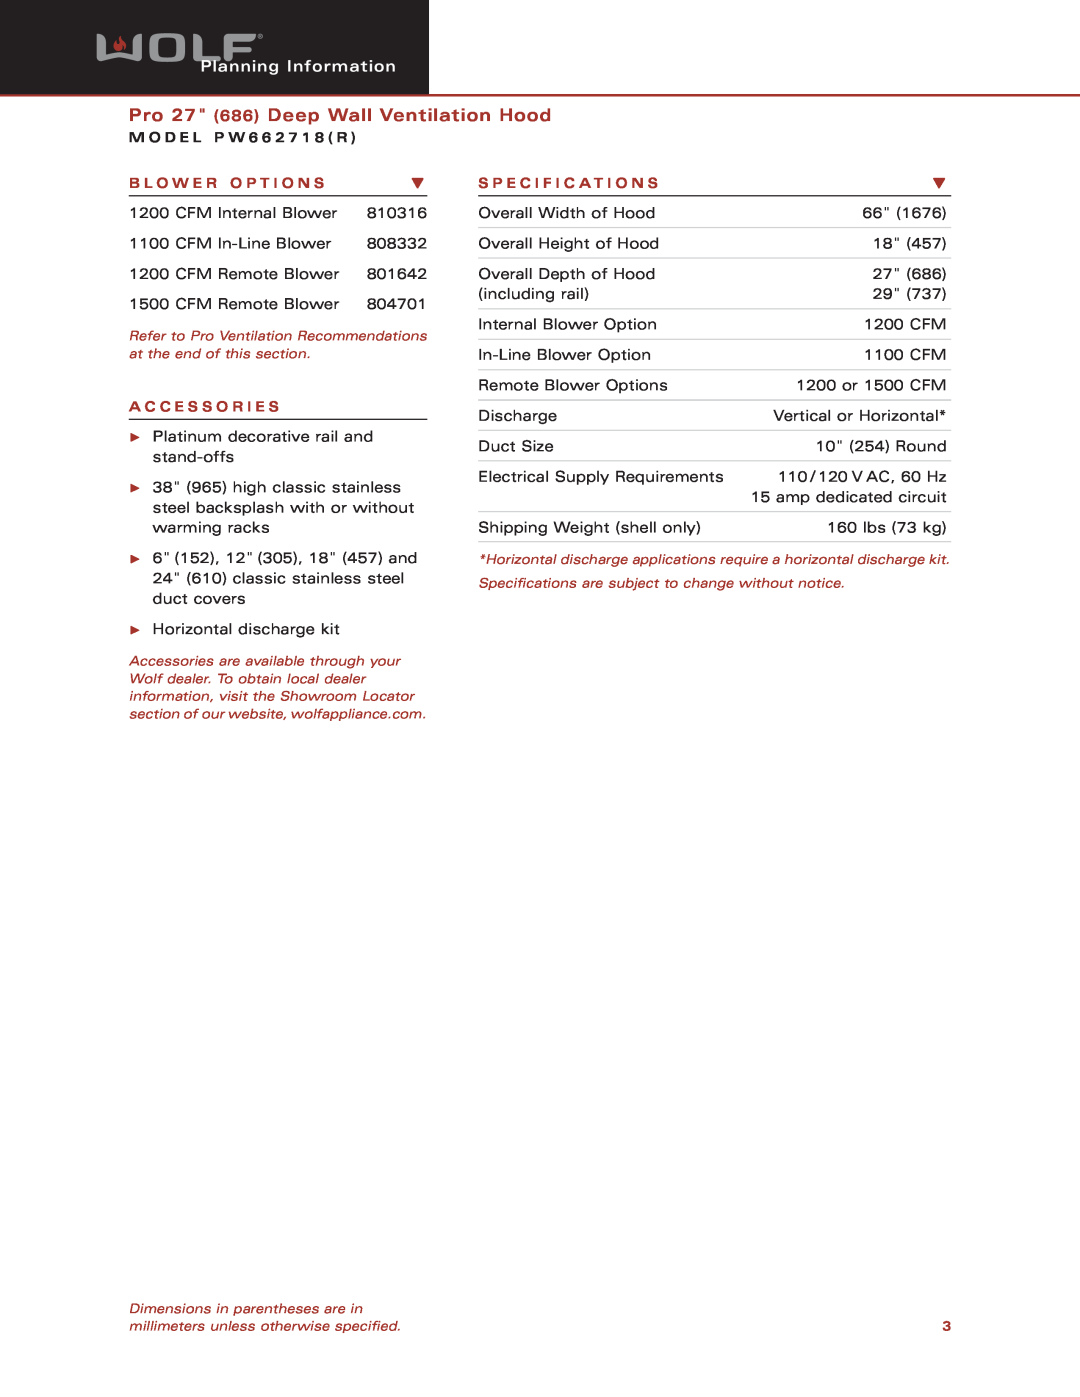 Wolf Appliance Company PW662718 Planning Information, Pro 27 686 Deep Wall Ventilation Hood M O D E L P W 6 6 2 7 1 8 R 